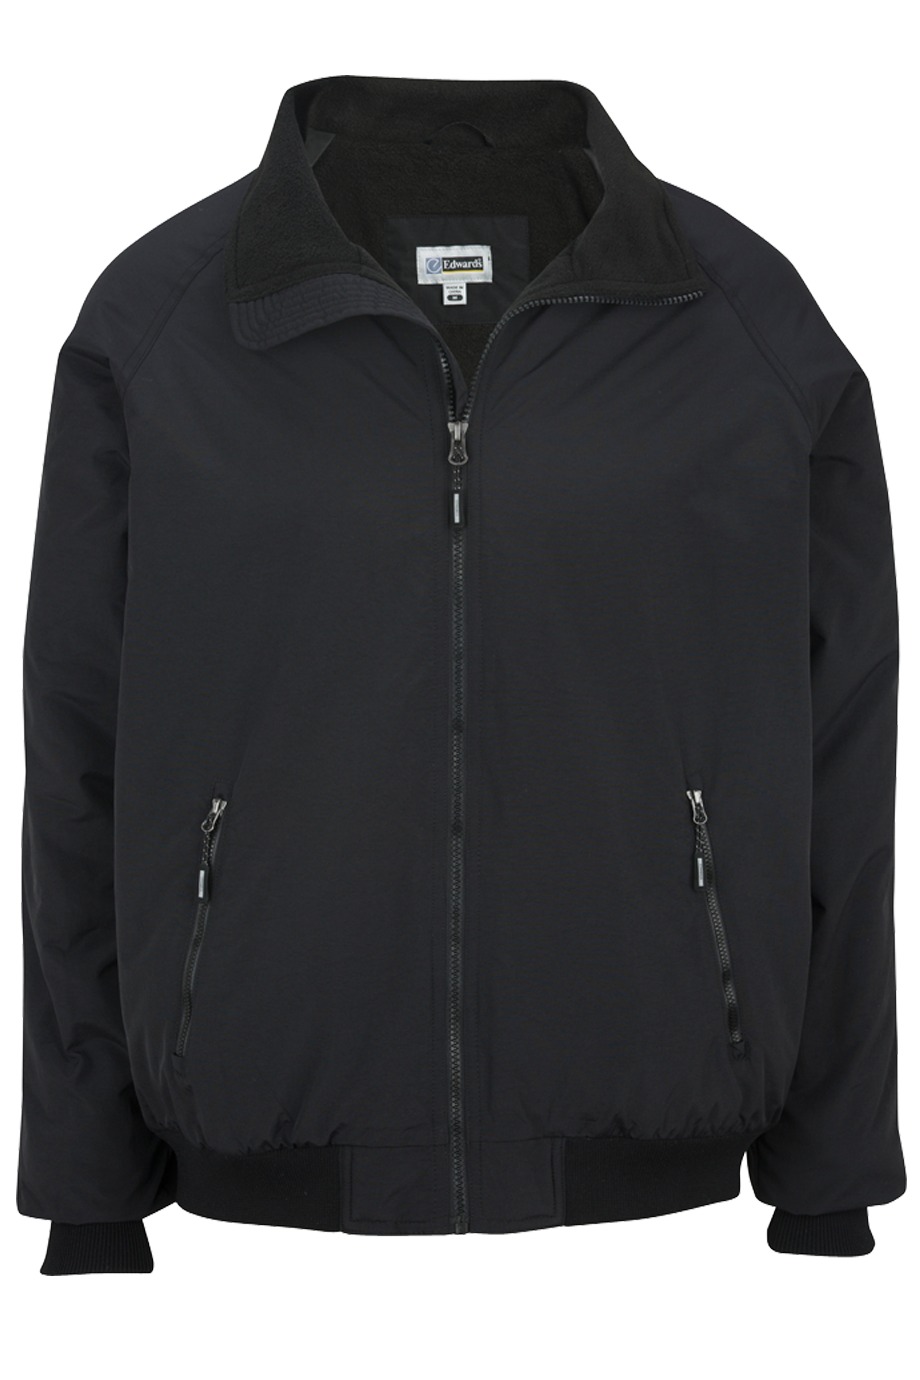 Edwards Garment 3410 - Three Seasons Jacket